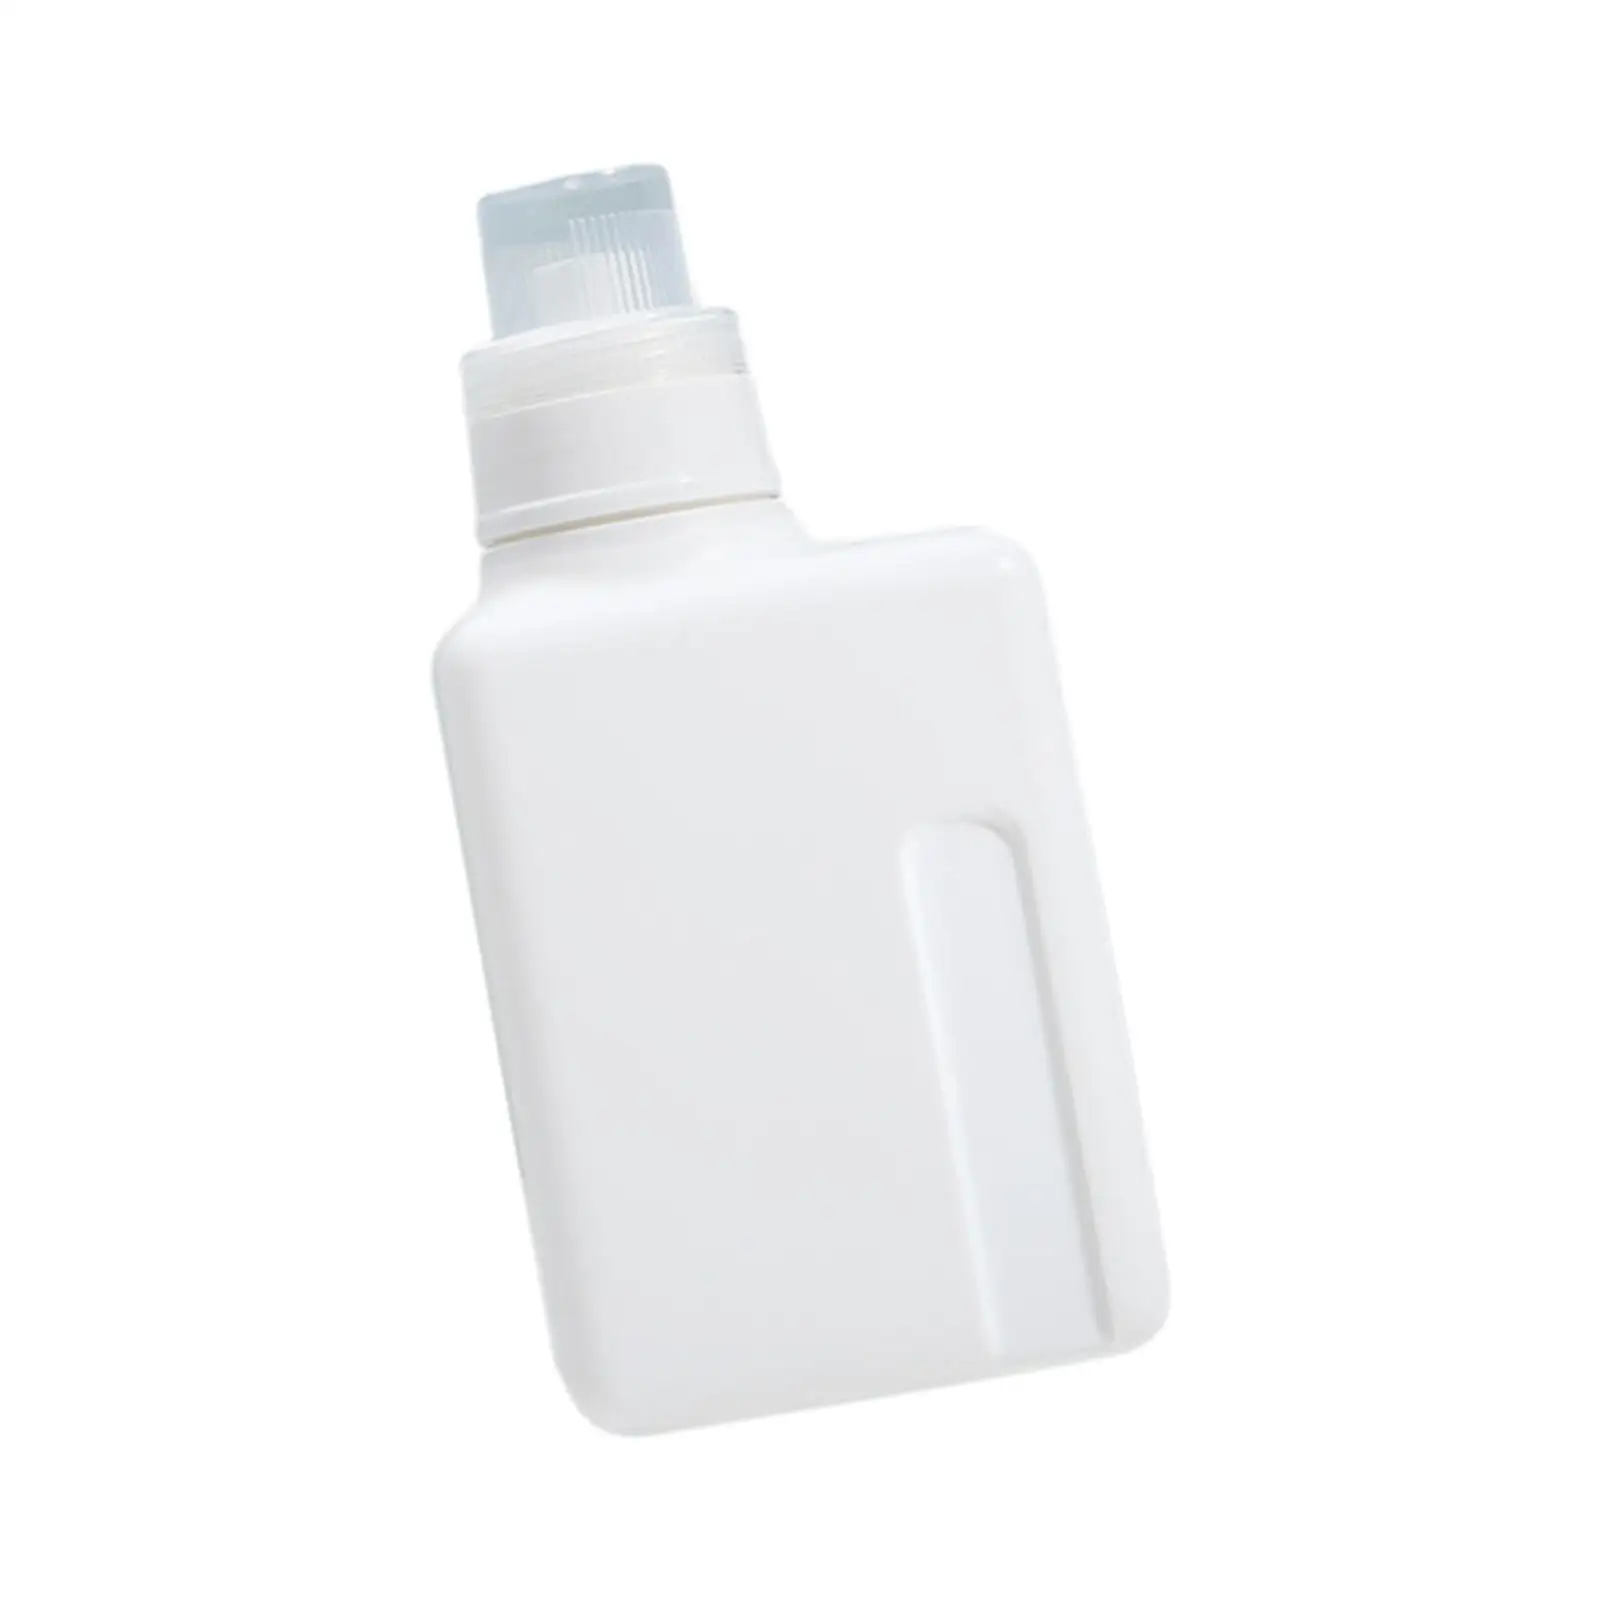 Empty Liquid Bottle Wash Shower Dispenser Portable Reusable Hand Wash Liquid with Cap for Kitchen Body Wash Creams Lotions Bath